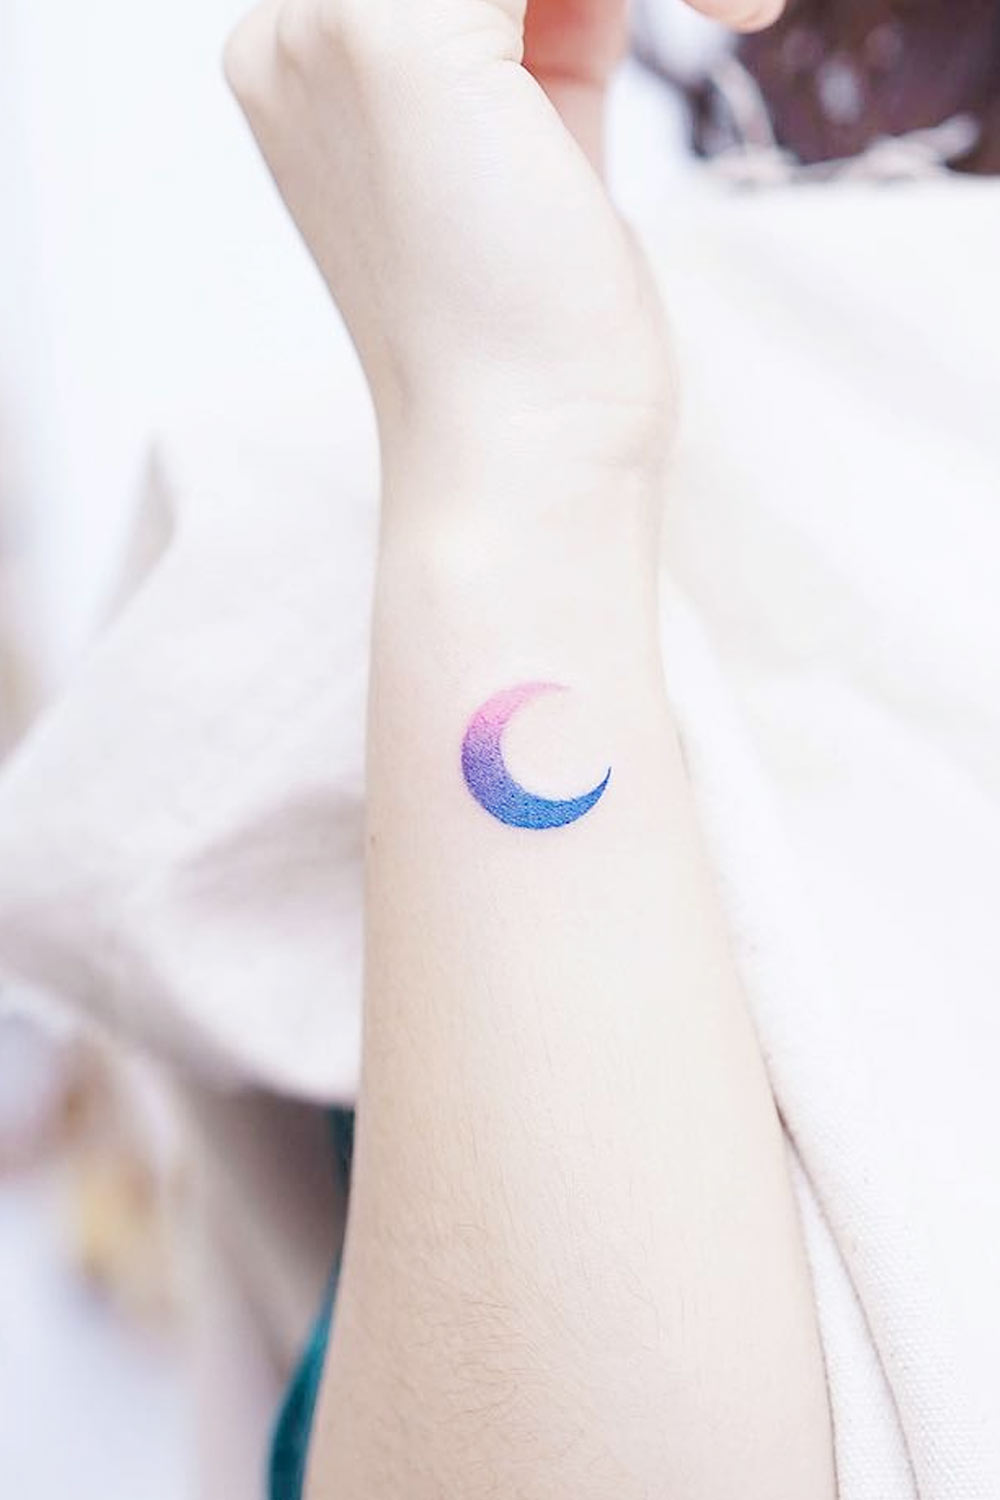 Side Wrist Small Moon Design Tattoo